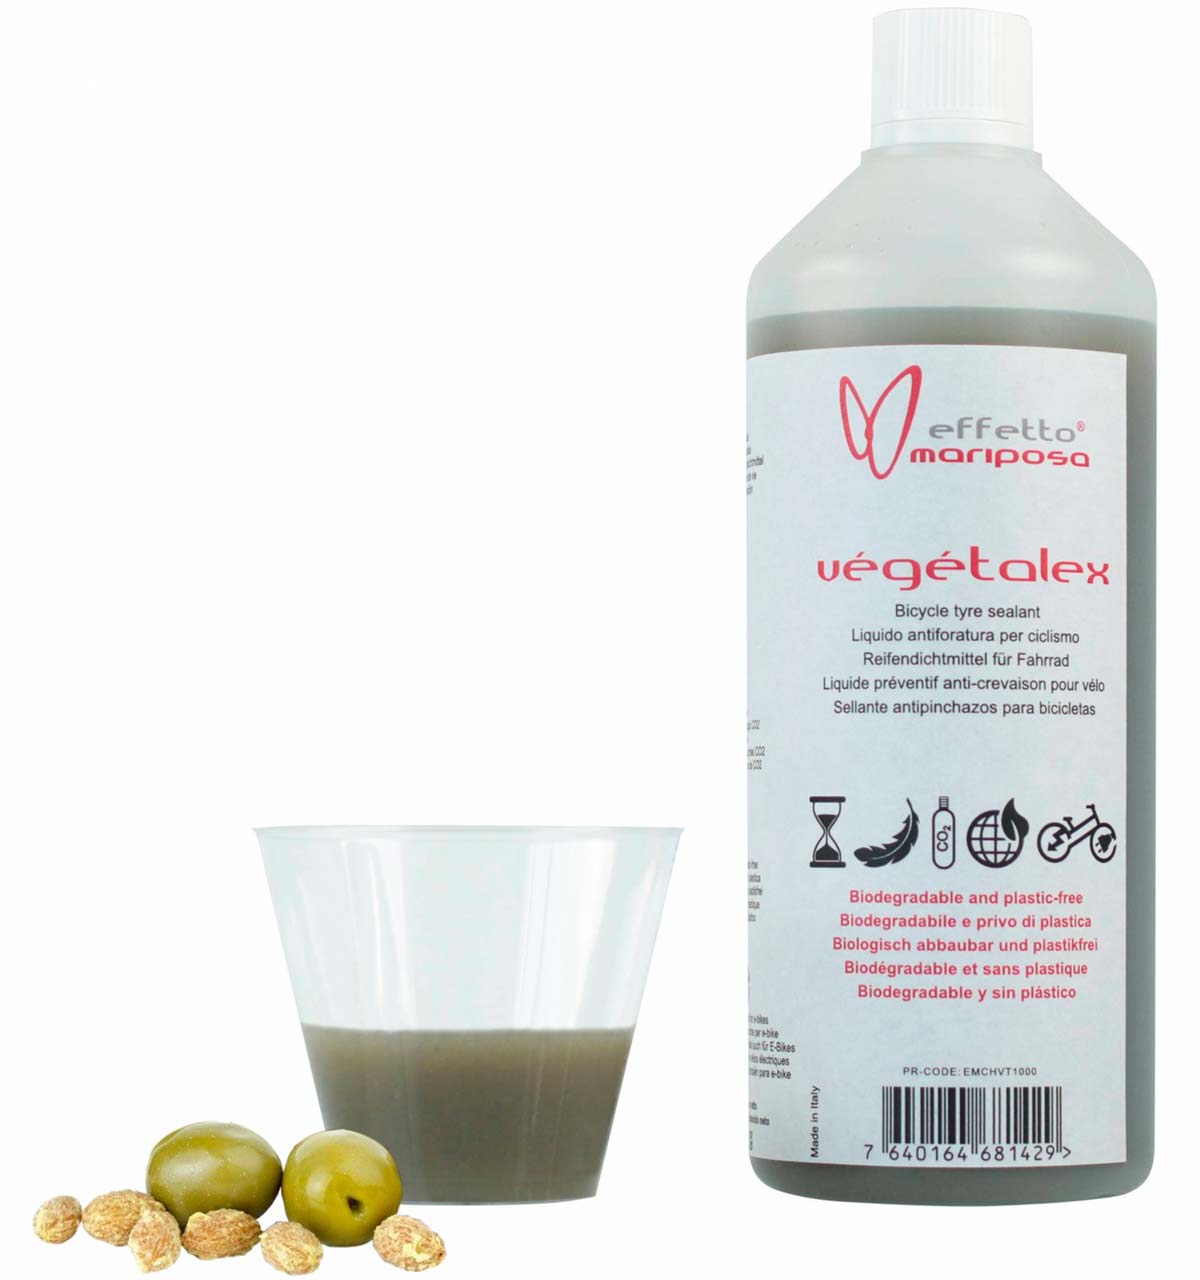 En TodoMountainBike: Effetto Mariposa Végétalex, un líquido sellante ecológico hecho a base de aceitunas